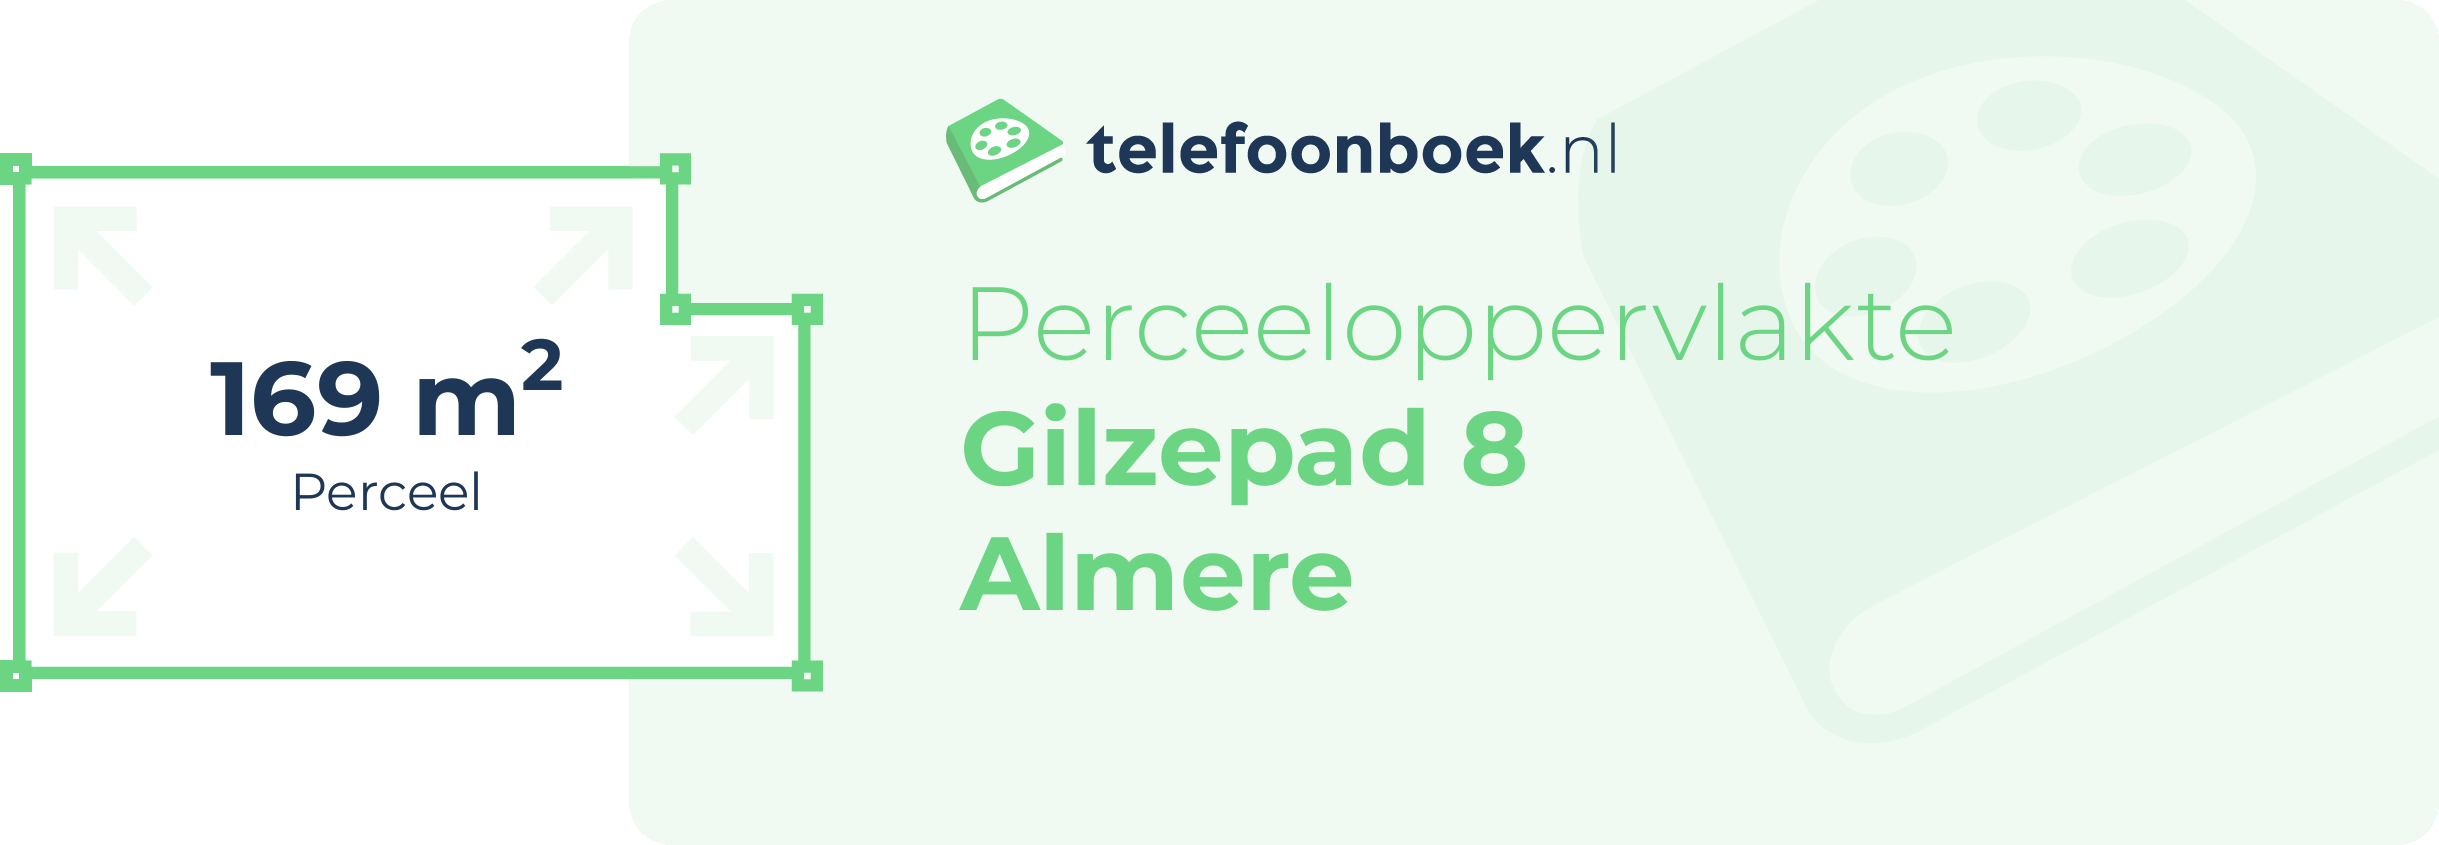 Perceeloppervlakte Gilzepad 8 Almere